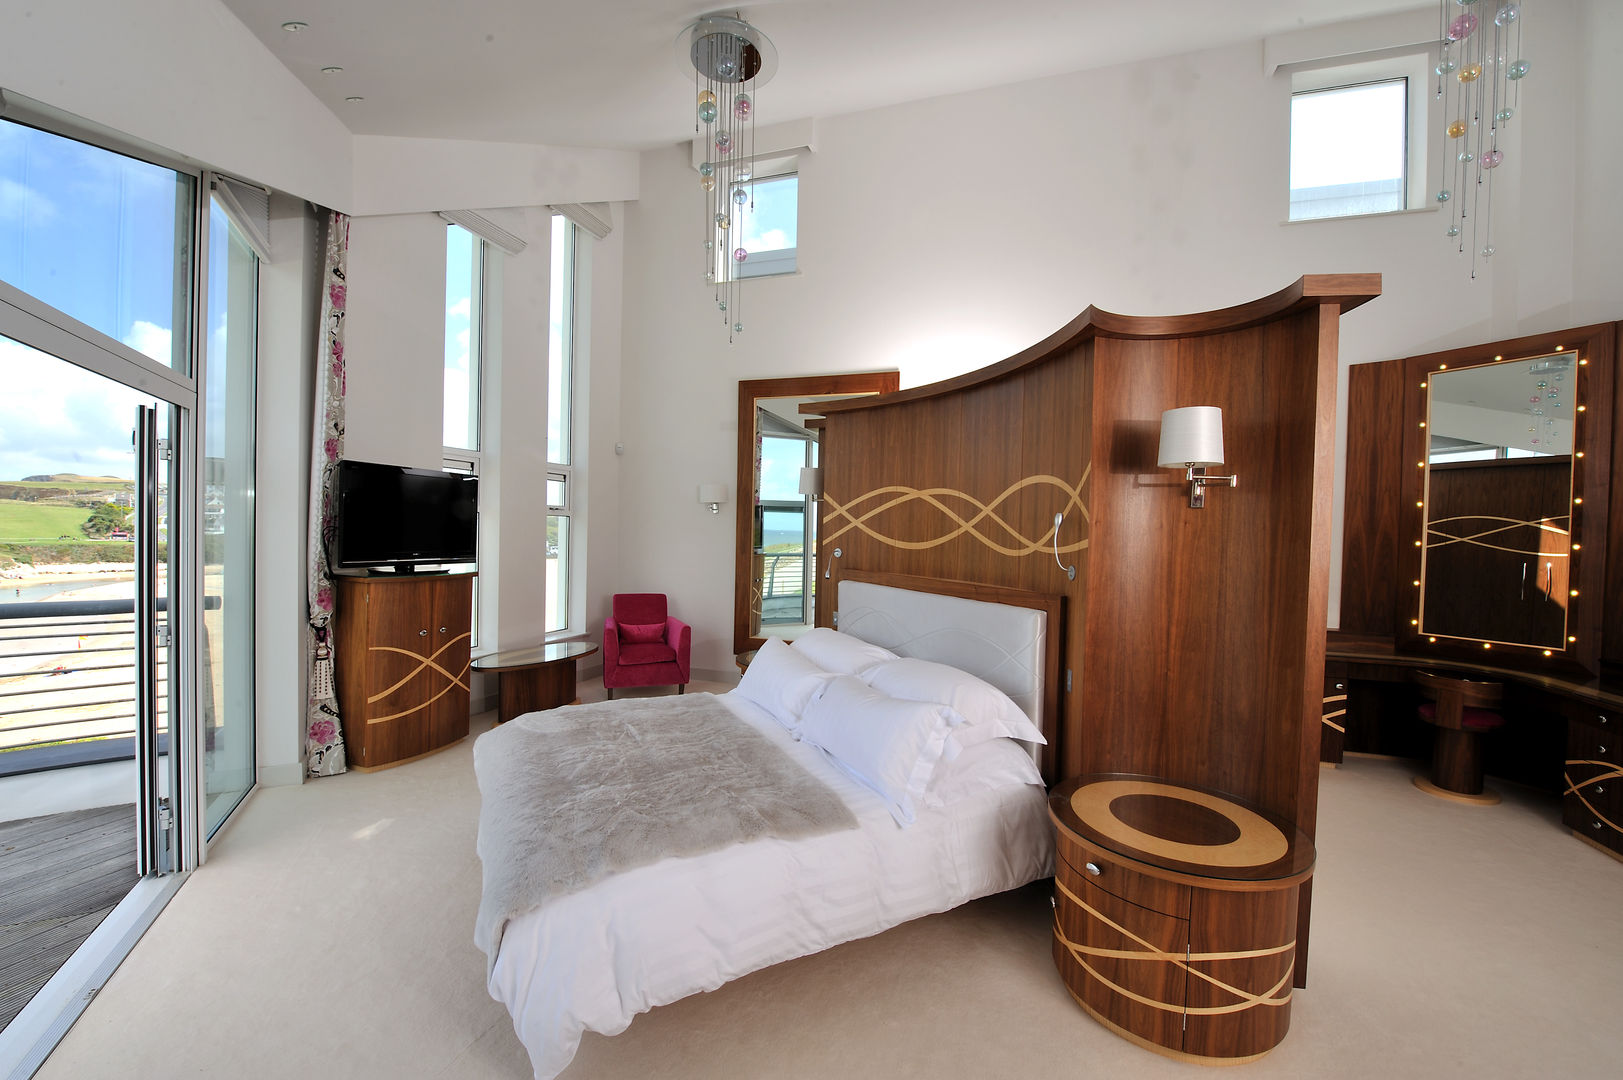 Sea House, Porth | Cornwall, Perfect Stays Perfect Stays ห้องนอน Master bedroom,bedroom,bedroom furniture,sea views,luxury,holiday home,beach house